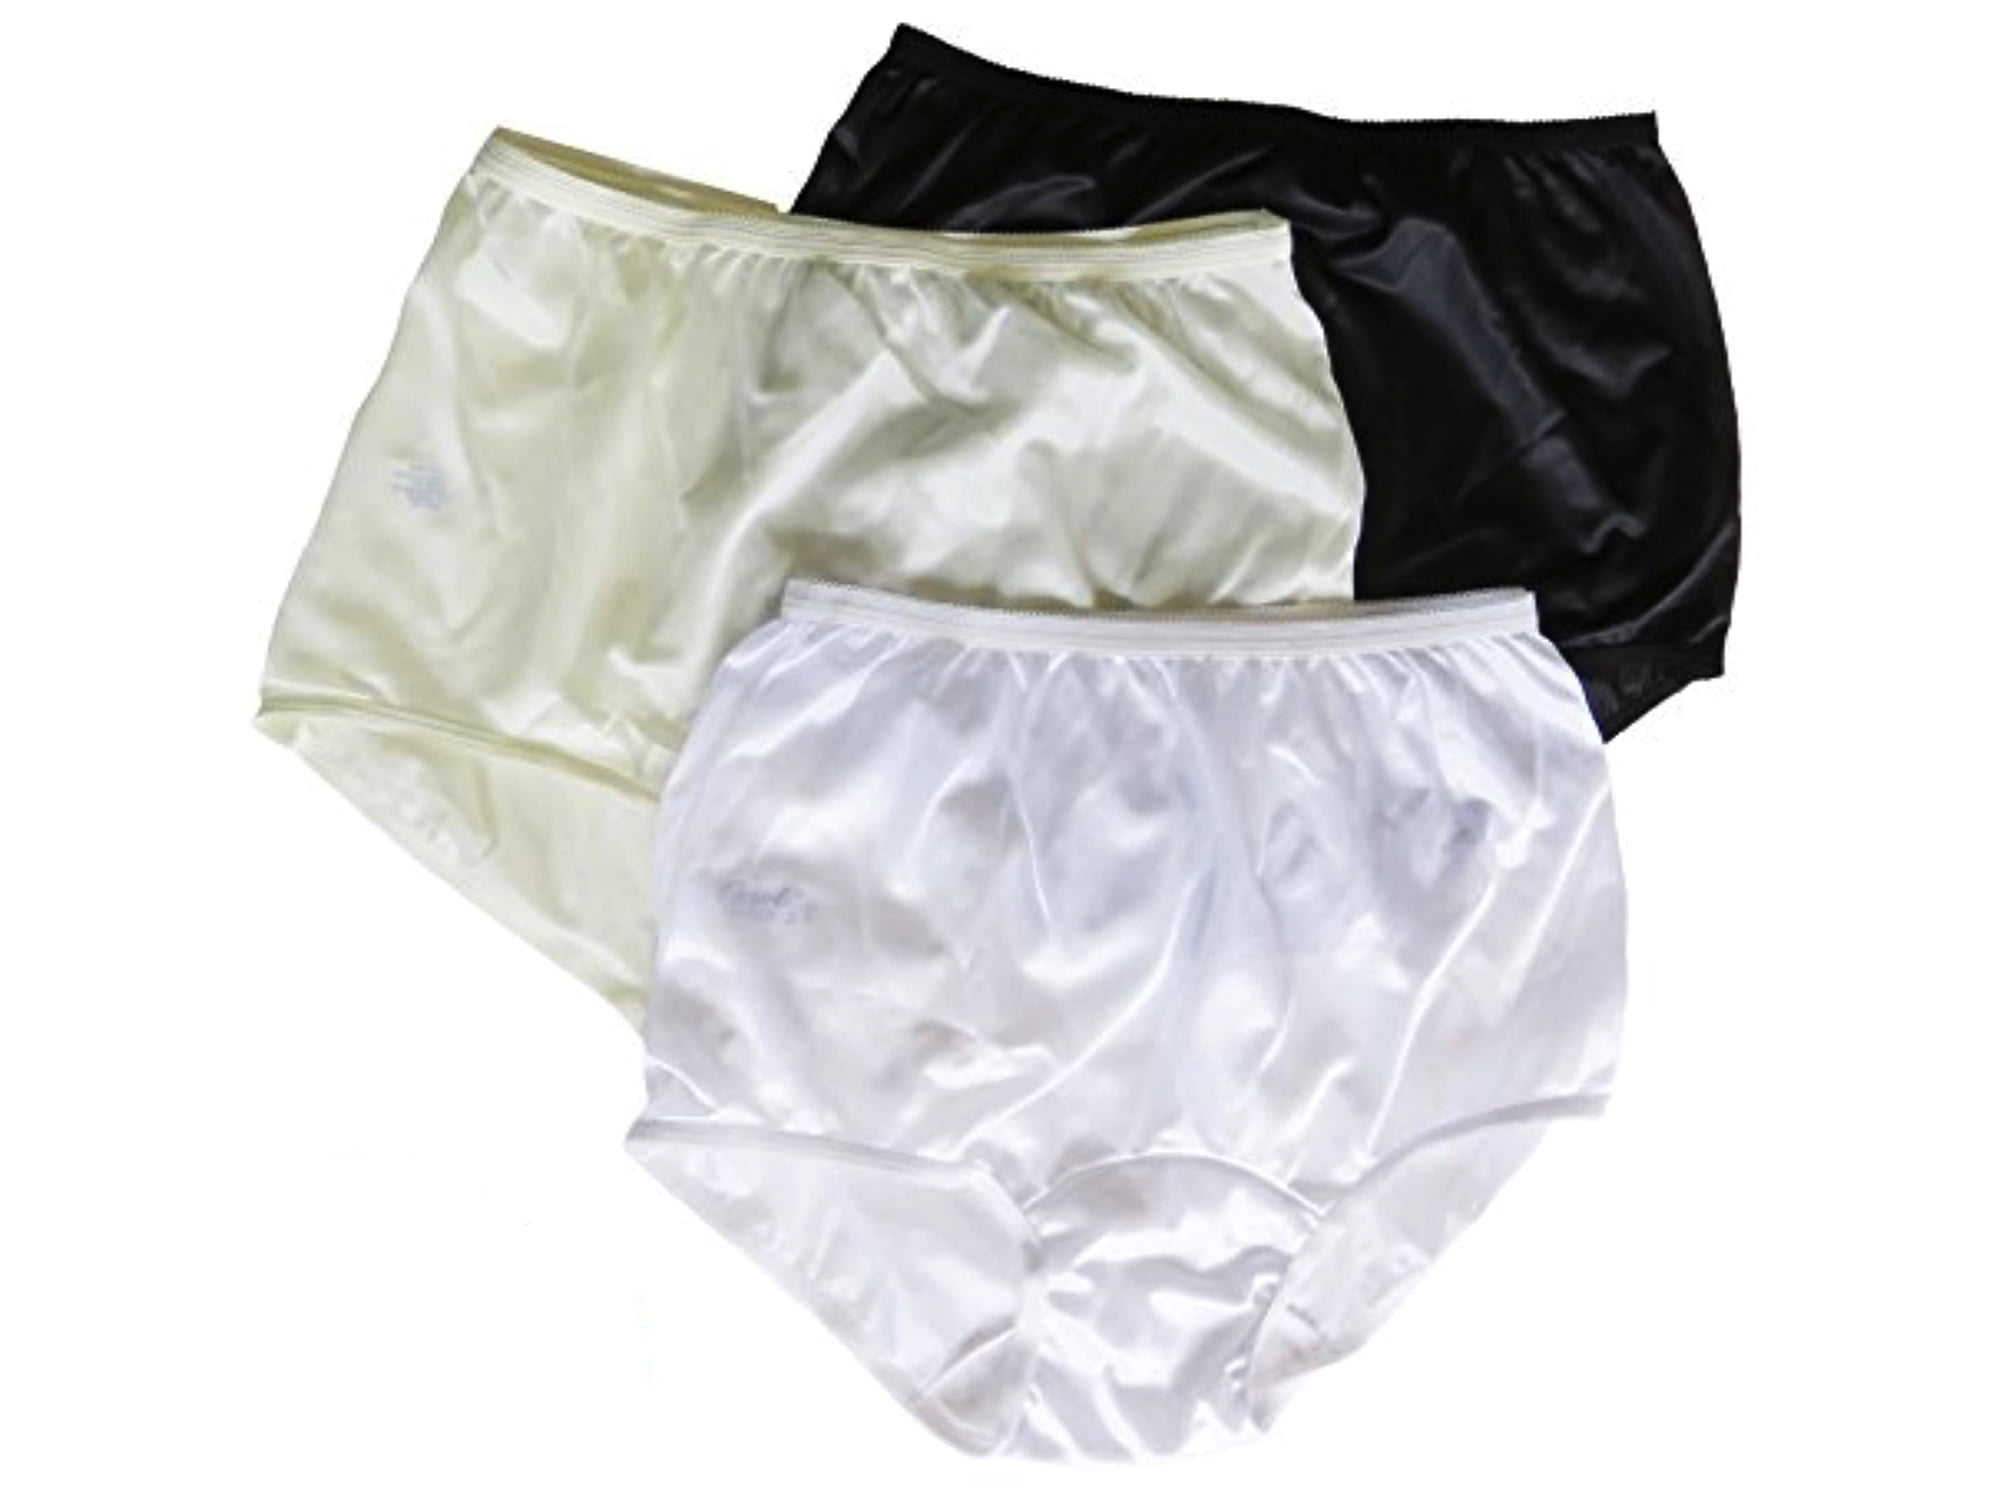 Bali Panty Underwear Panties Nylon Freeform Extra full cut Elastic